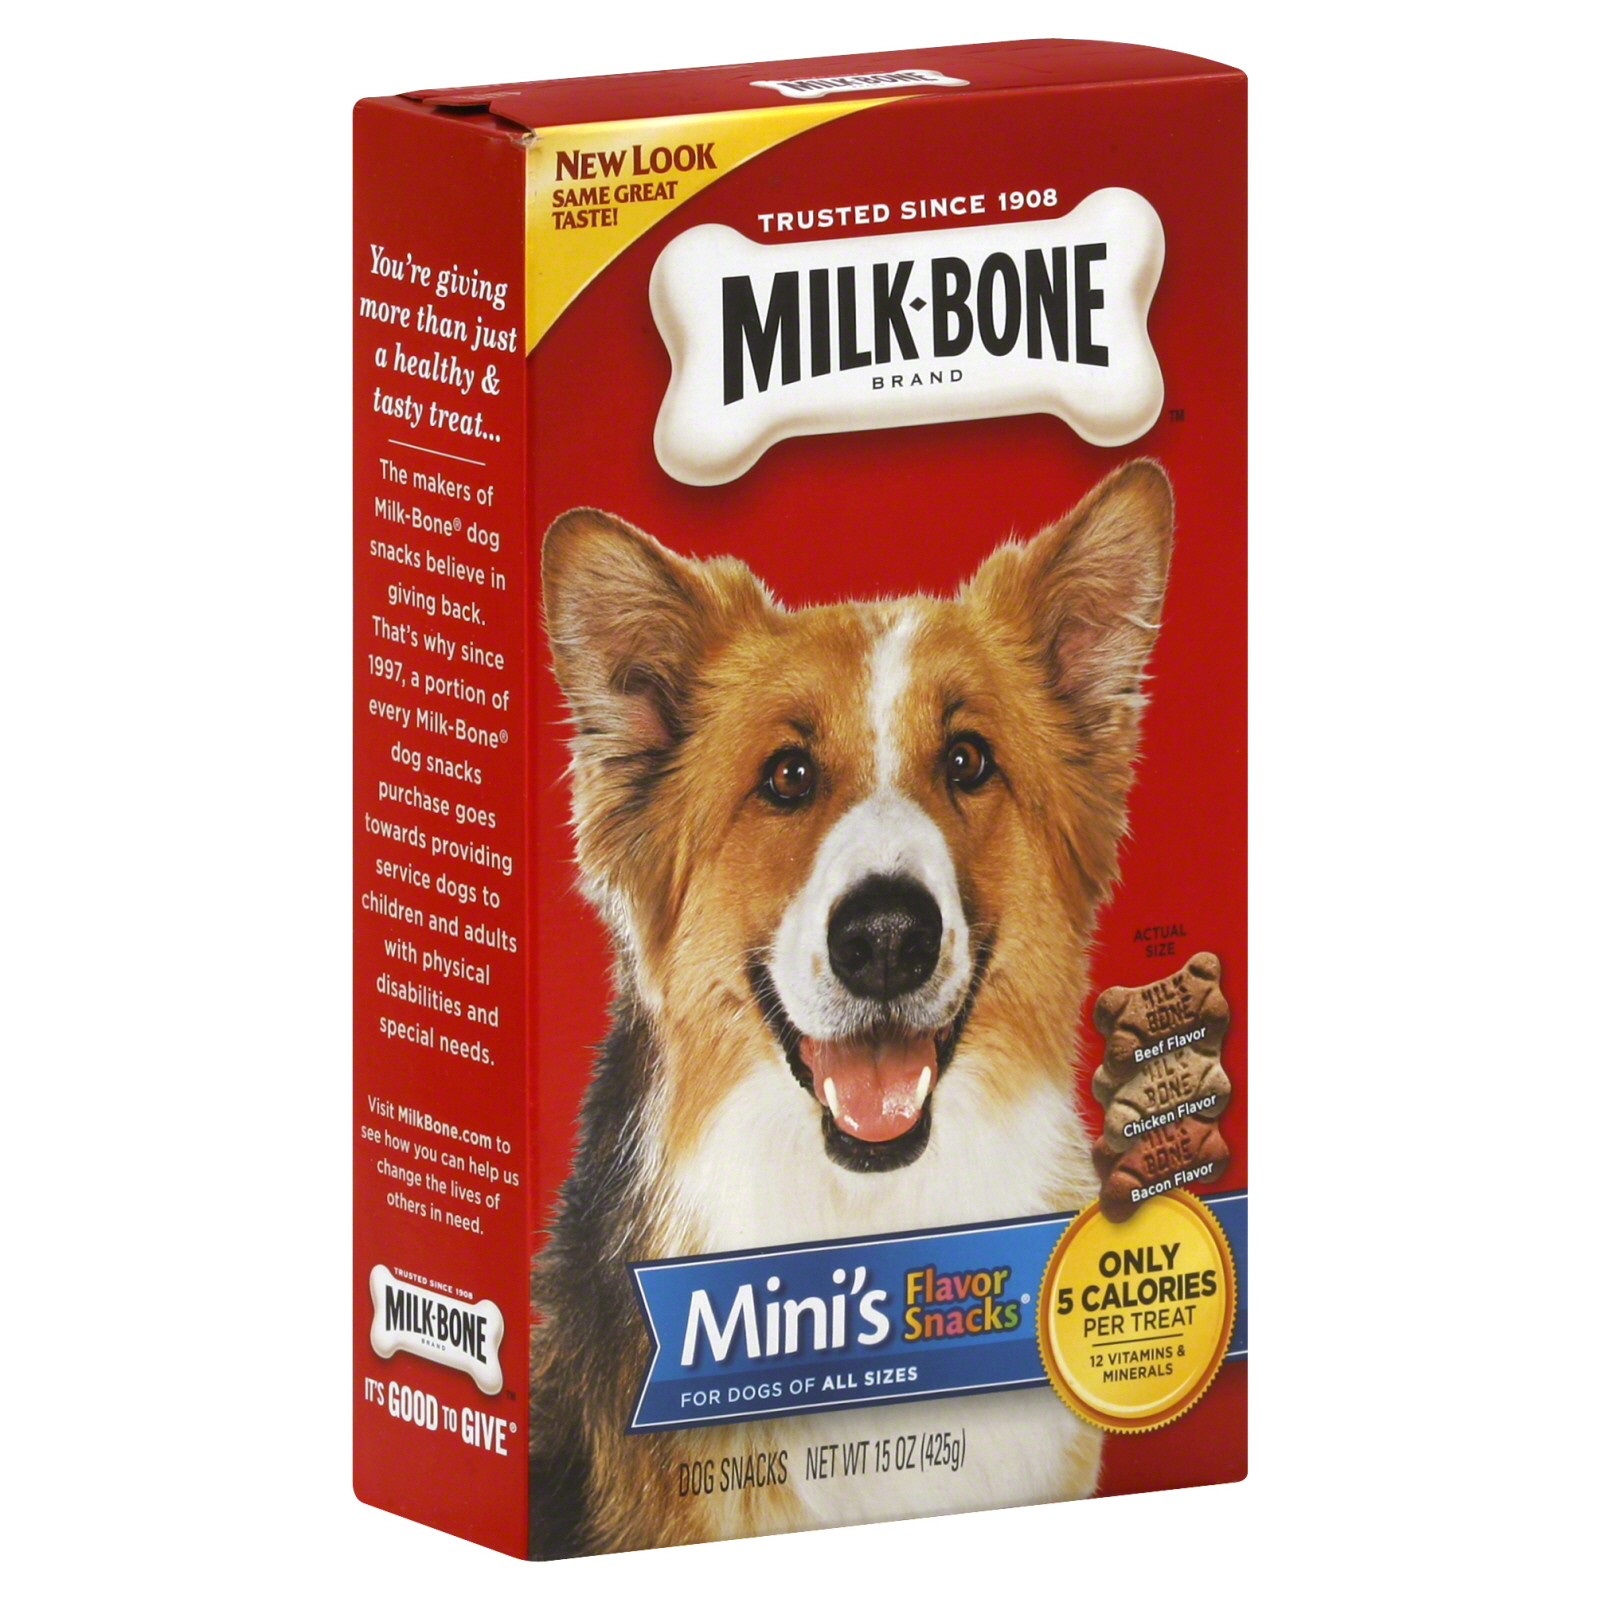 Milk-Bone Mini's Variety Pack Dog Snacks, 15 oz. Box